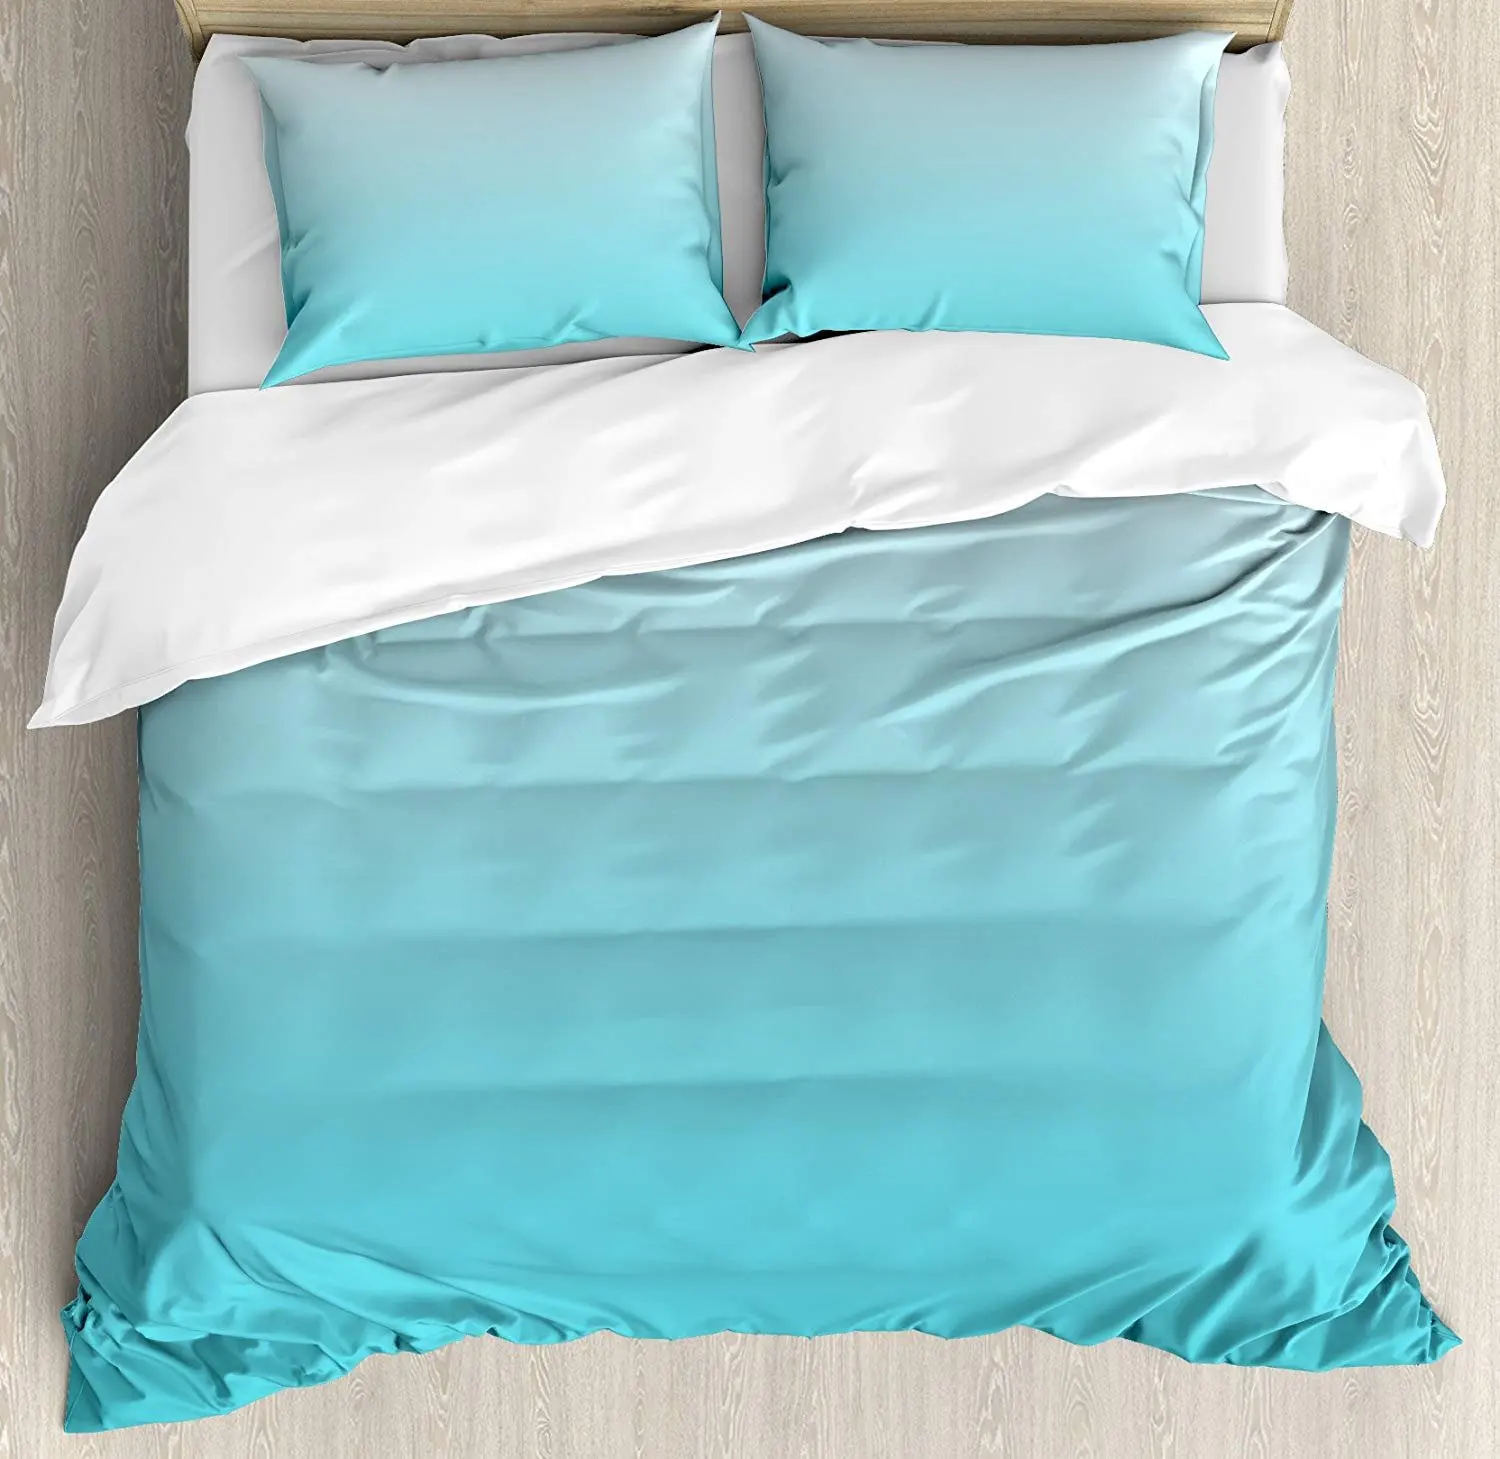 Ombre Bedding Set Deep Maldives Sealife Ocean Inspired Aquatic Color Modern Design Digital Art Pillowcases Quilt Cover For Home